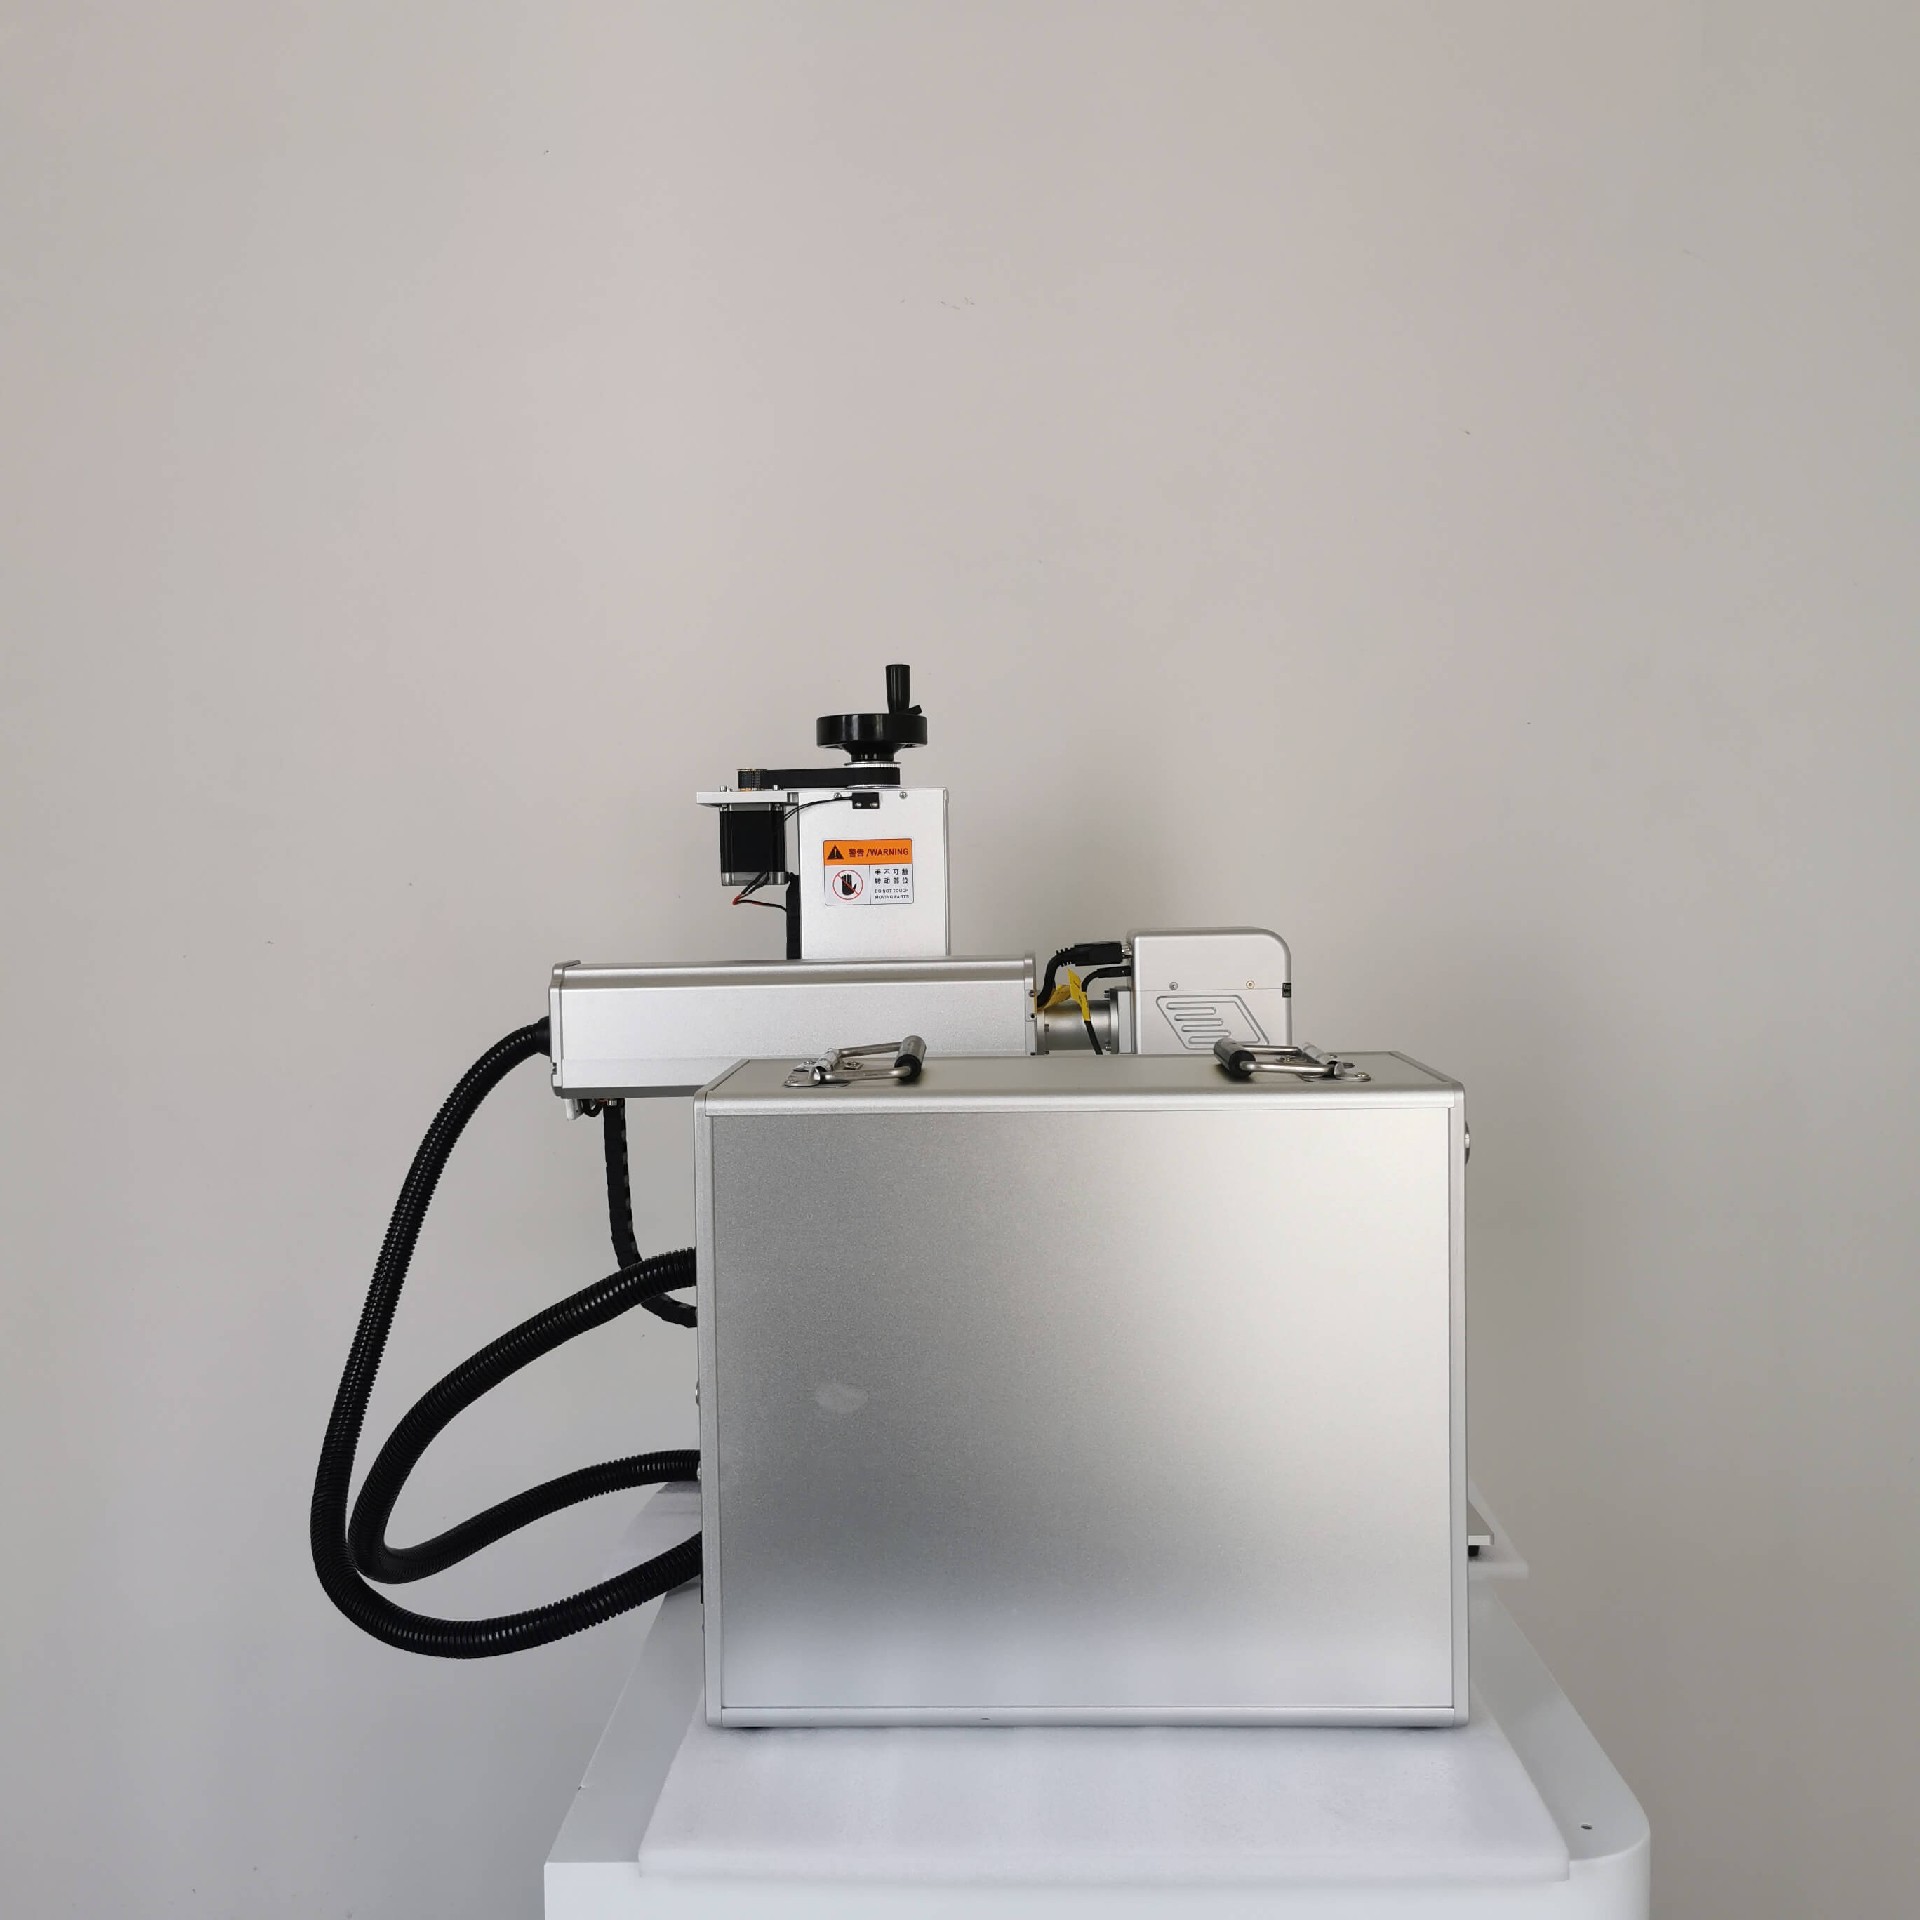 Haotian fiber laser machine with cyclop camera scanning head